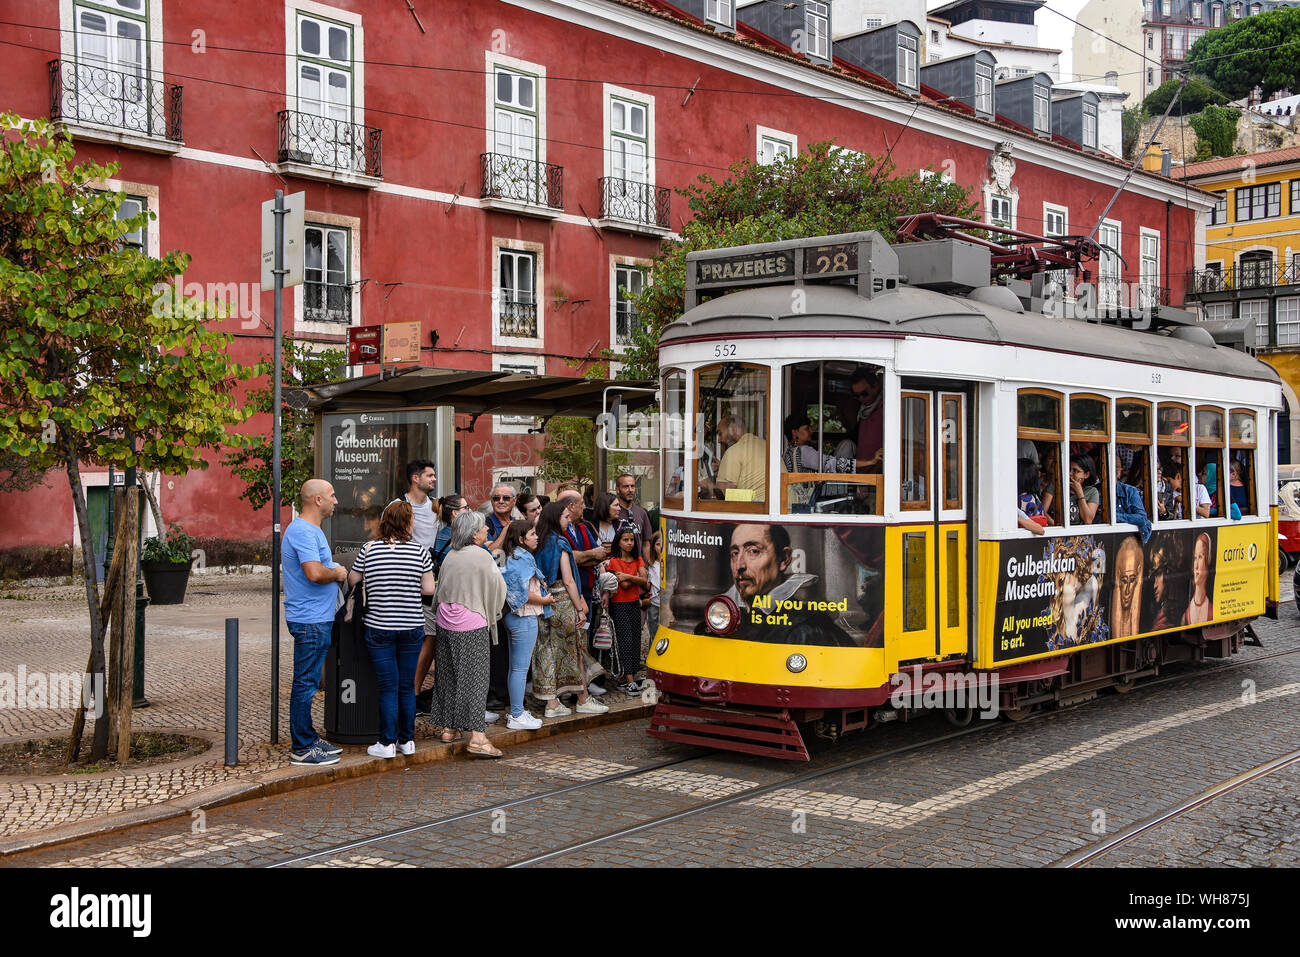 Lisbon, Portugal - July 27, 2019: Trams providing mass public transportation in the Alfama district of Lisbon, Portugal Stock Photo